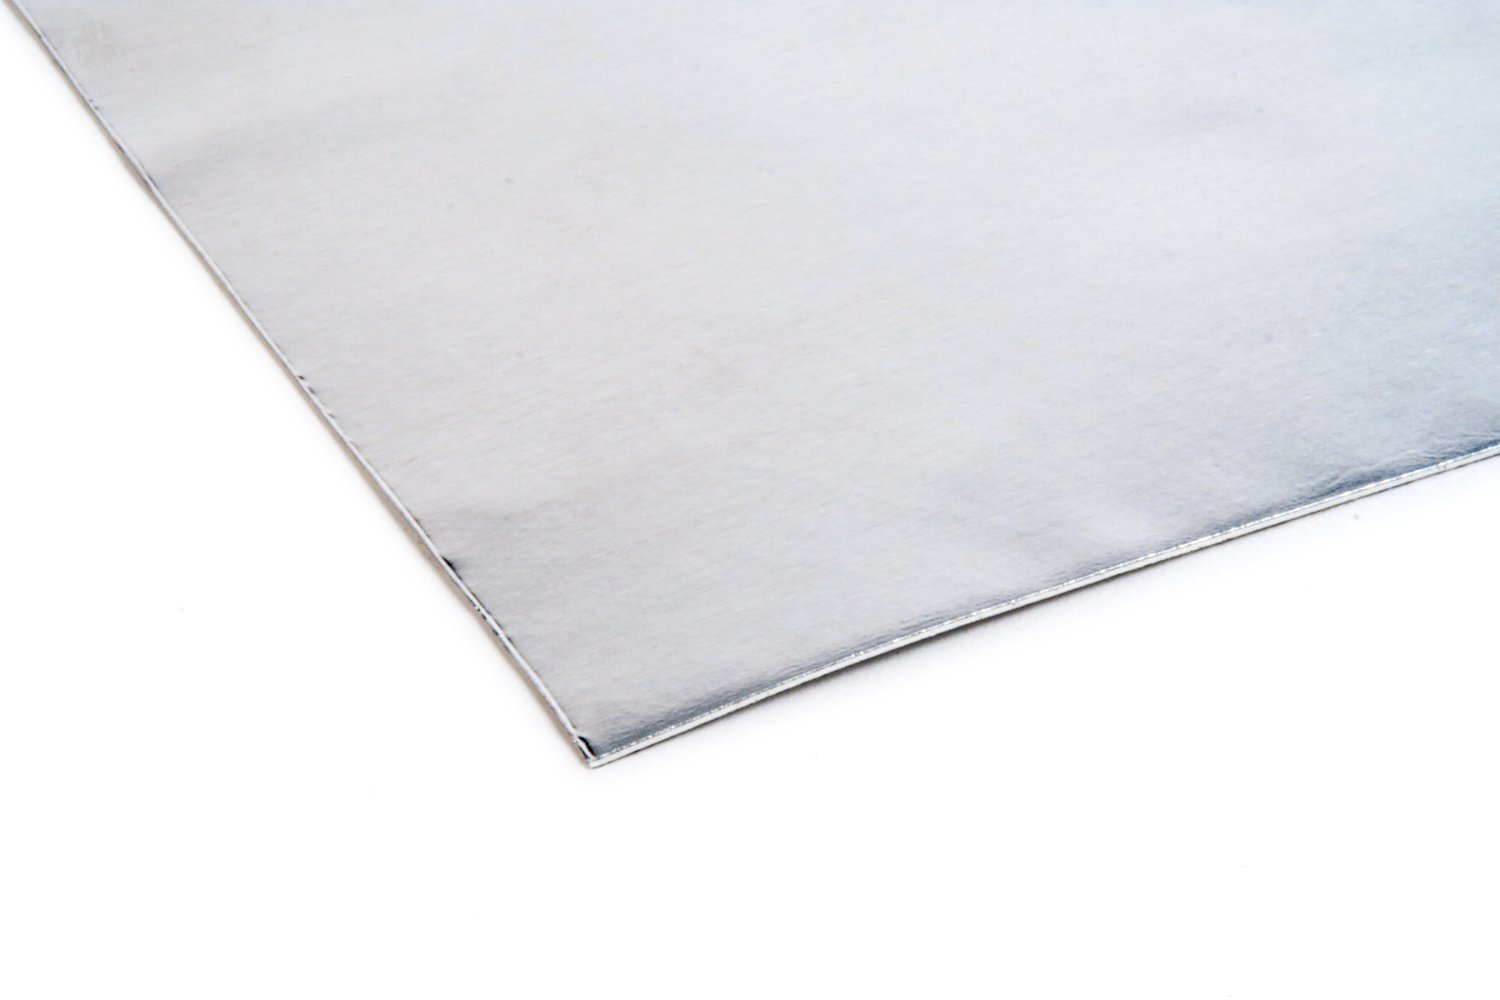 7100050369 - 3M EMI Aluminum Foil Shielding Tape 1170, 7.7 in x 10 in sheet, 10
Sheets/Bag